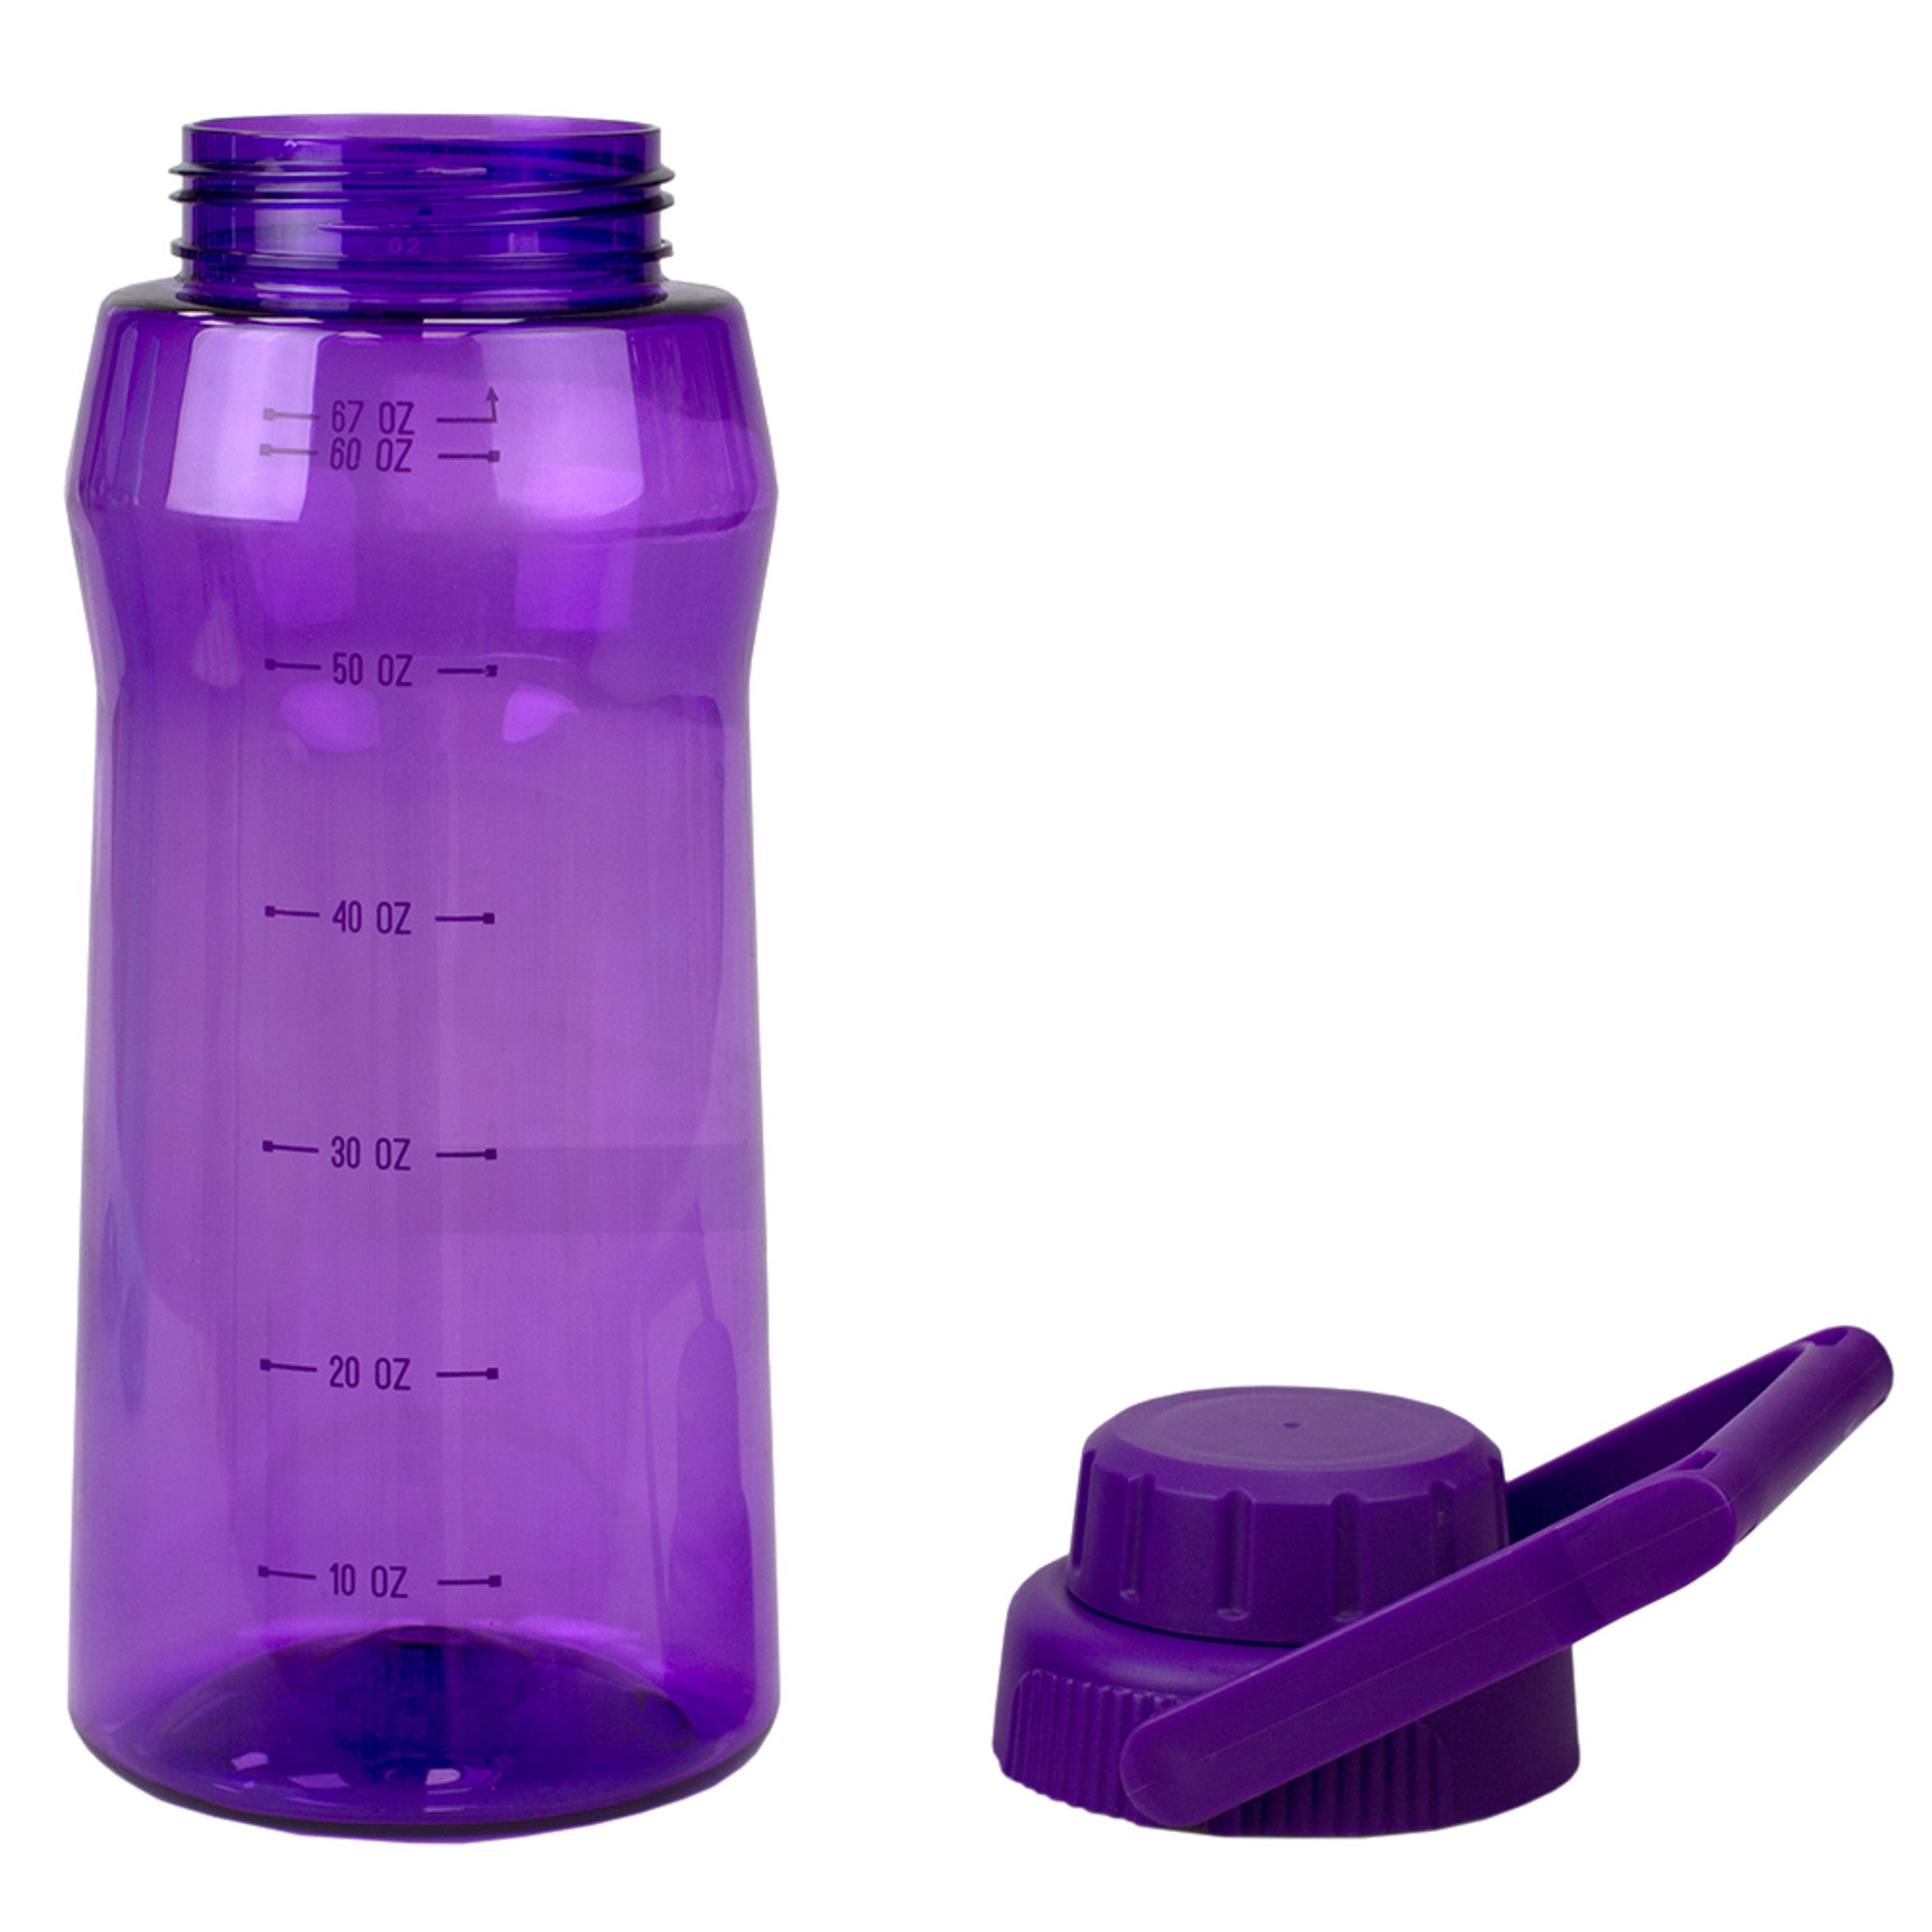 Home Basics No Spill 67 oz. Plastic Travel Mug with  Easy Grip Wide Handle - Assorted Colors